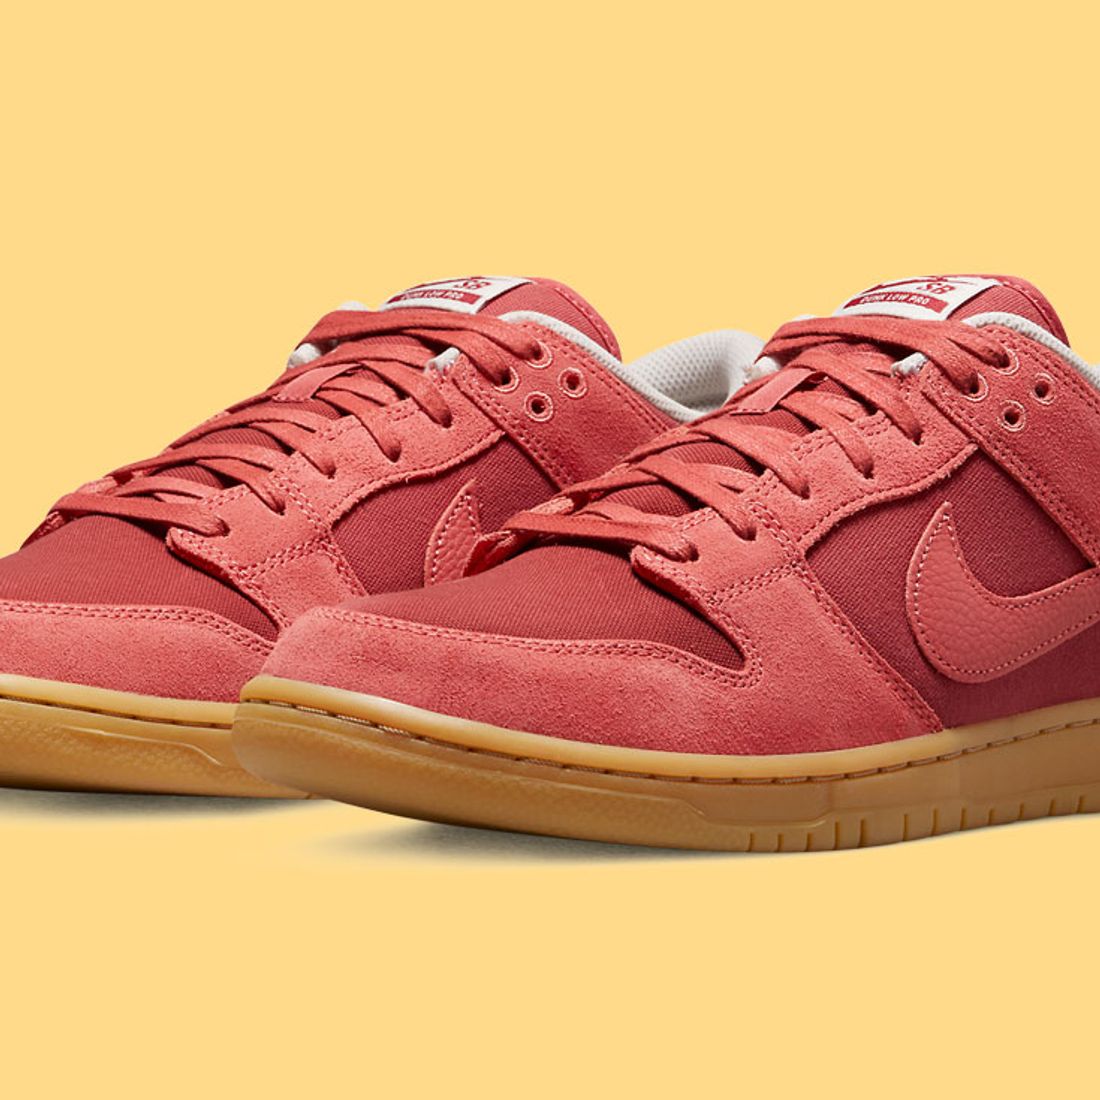 Vise dig hver Ordinere Release Date! Nike SB Dunk Low 'Red Gum' aka 'Adobe' - Sneaker Freaker